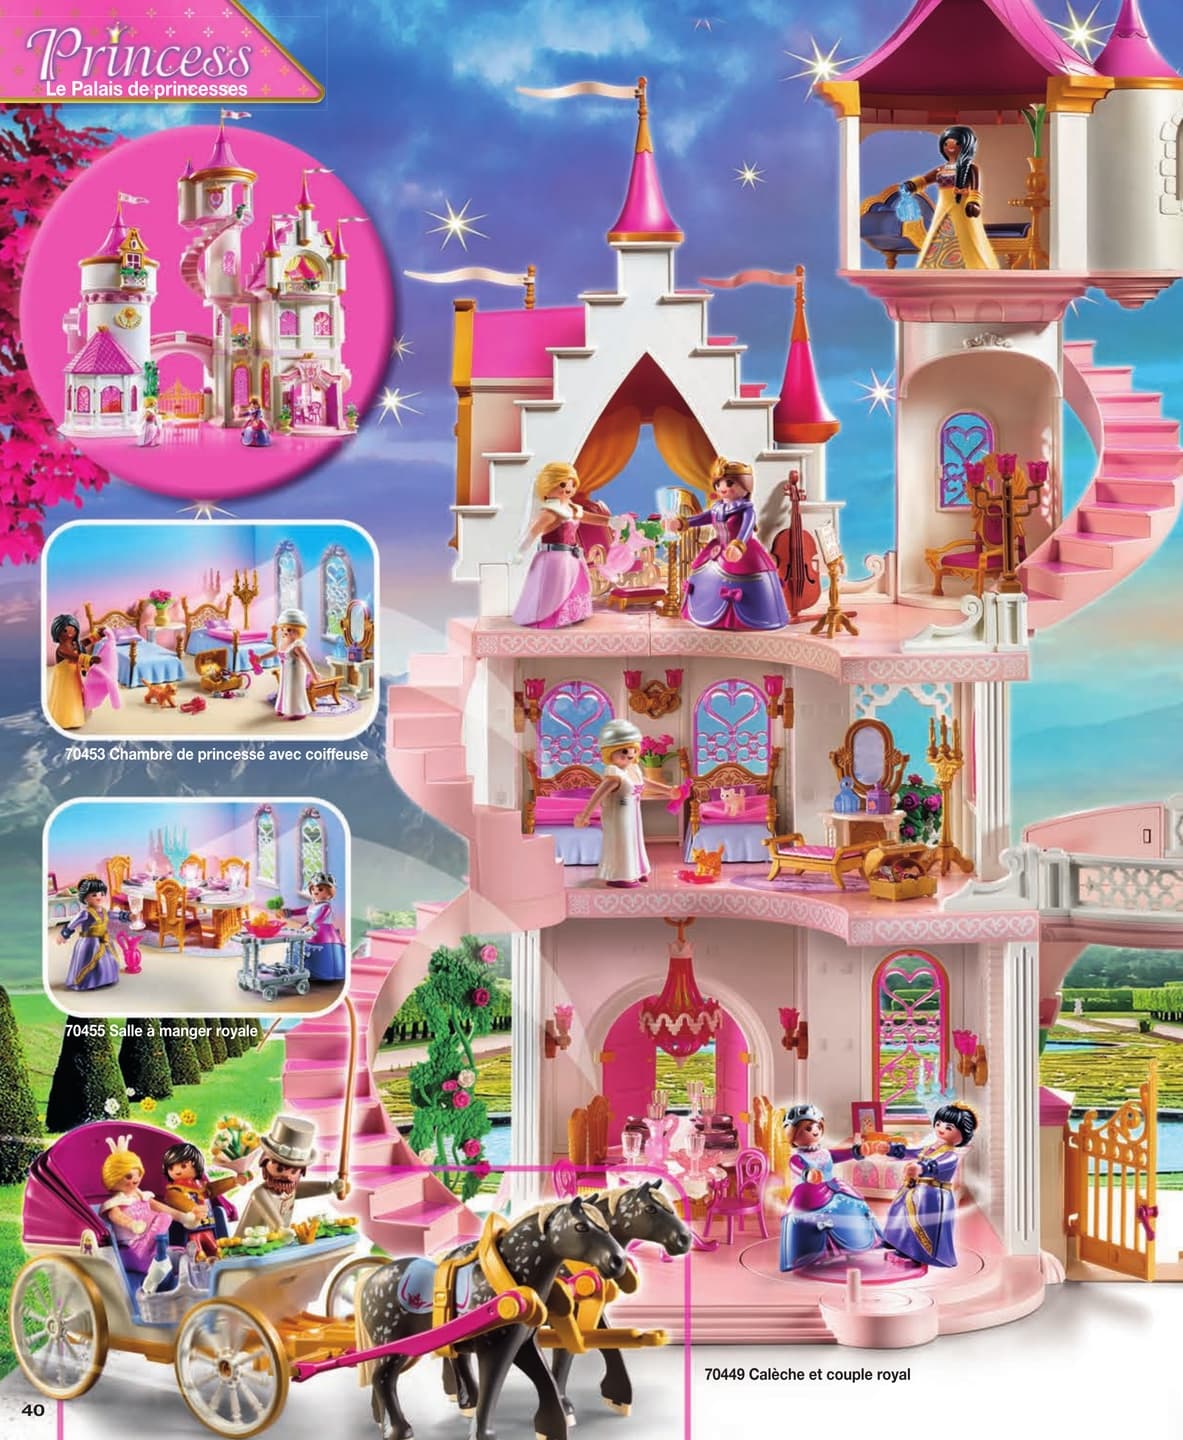 70455 - Playmobil Princess - Salle à manger royale